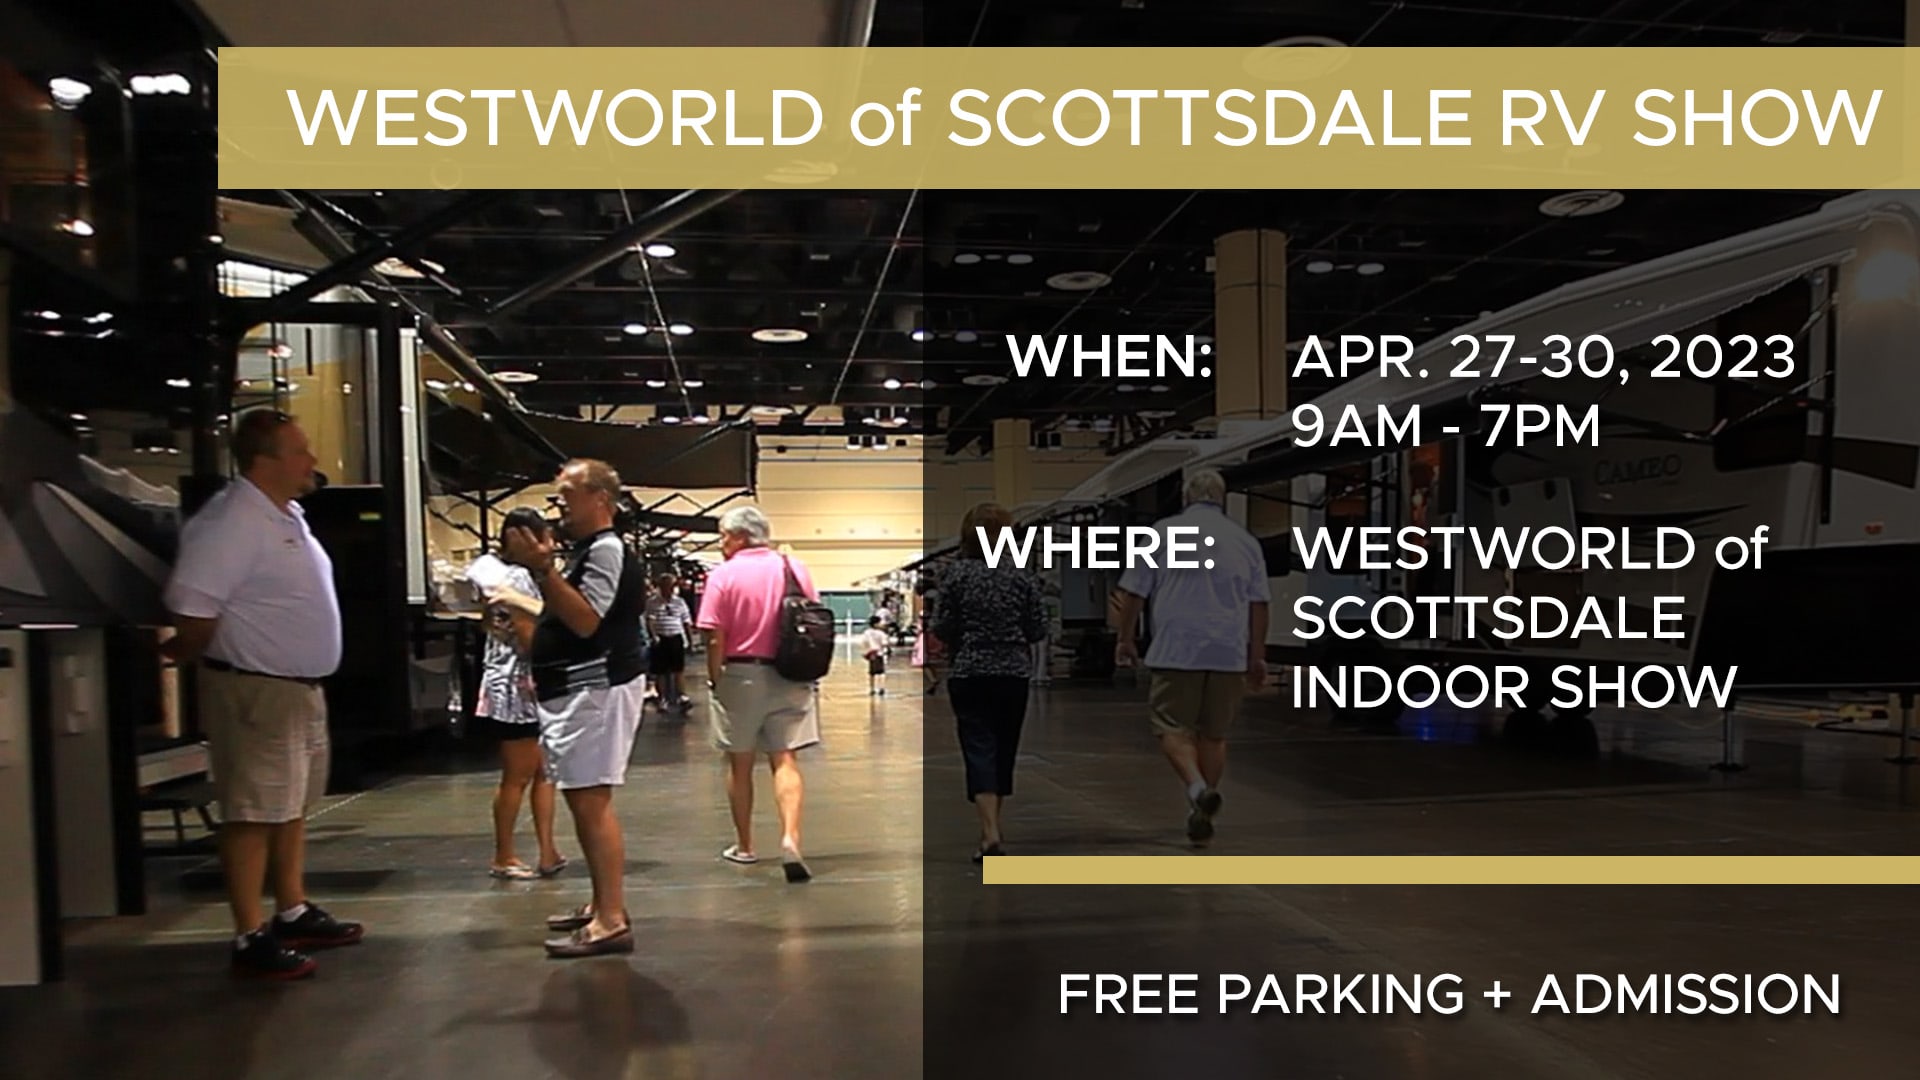 Westworld of Scottsdale RV Show RV Shows in the USA La Mesa RV